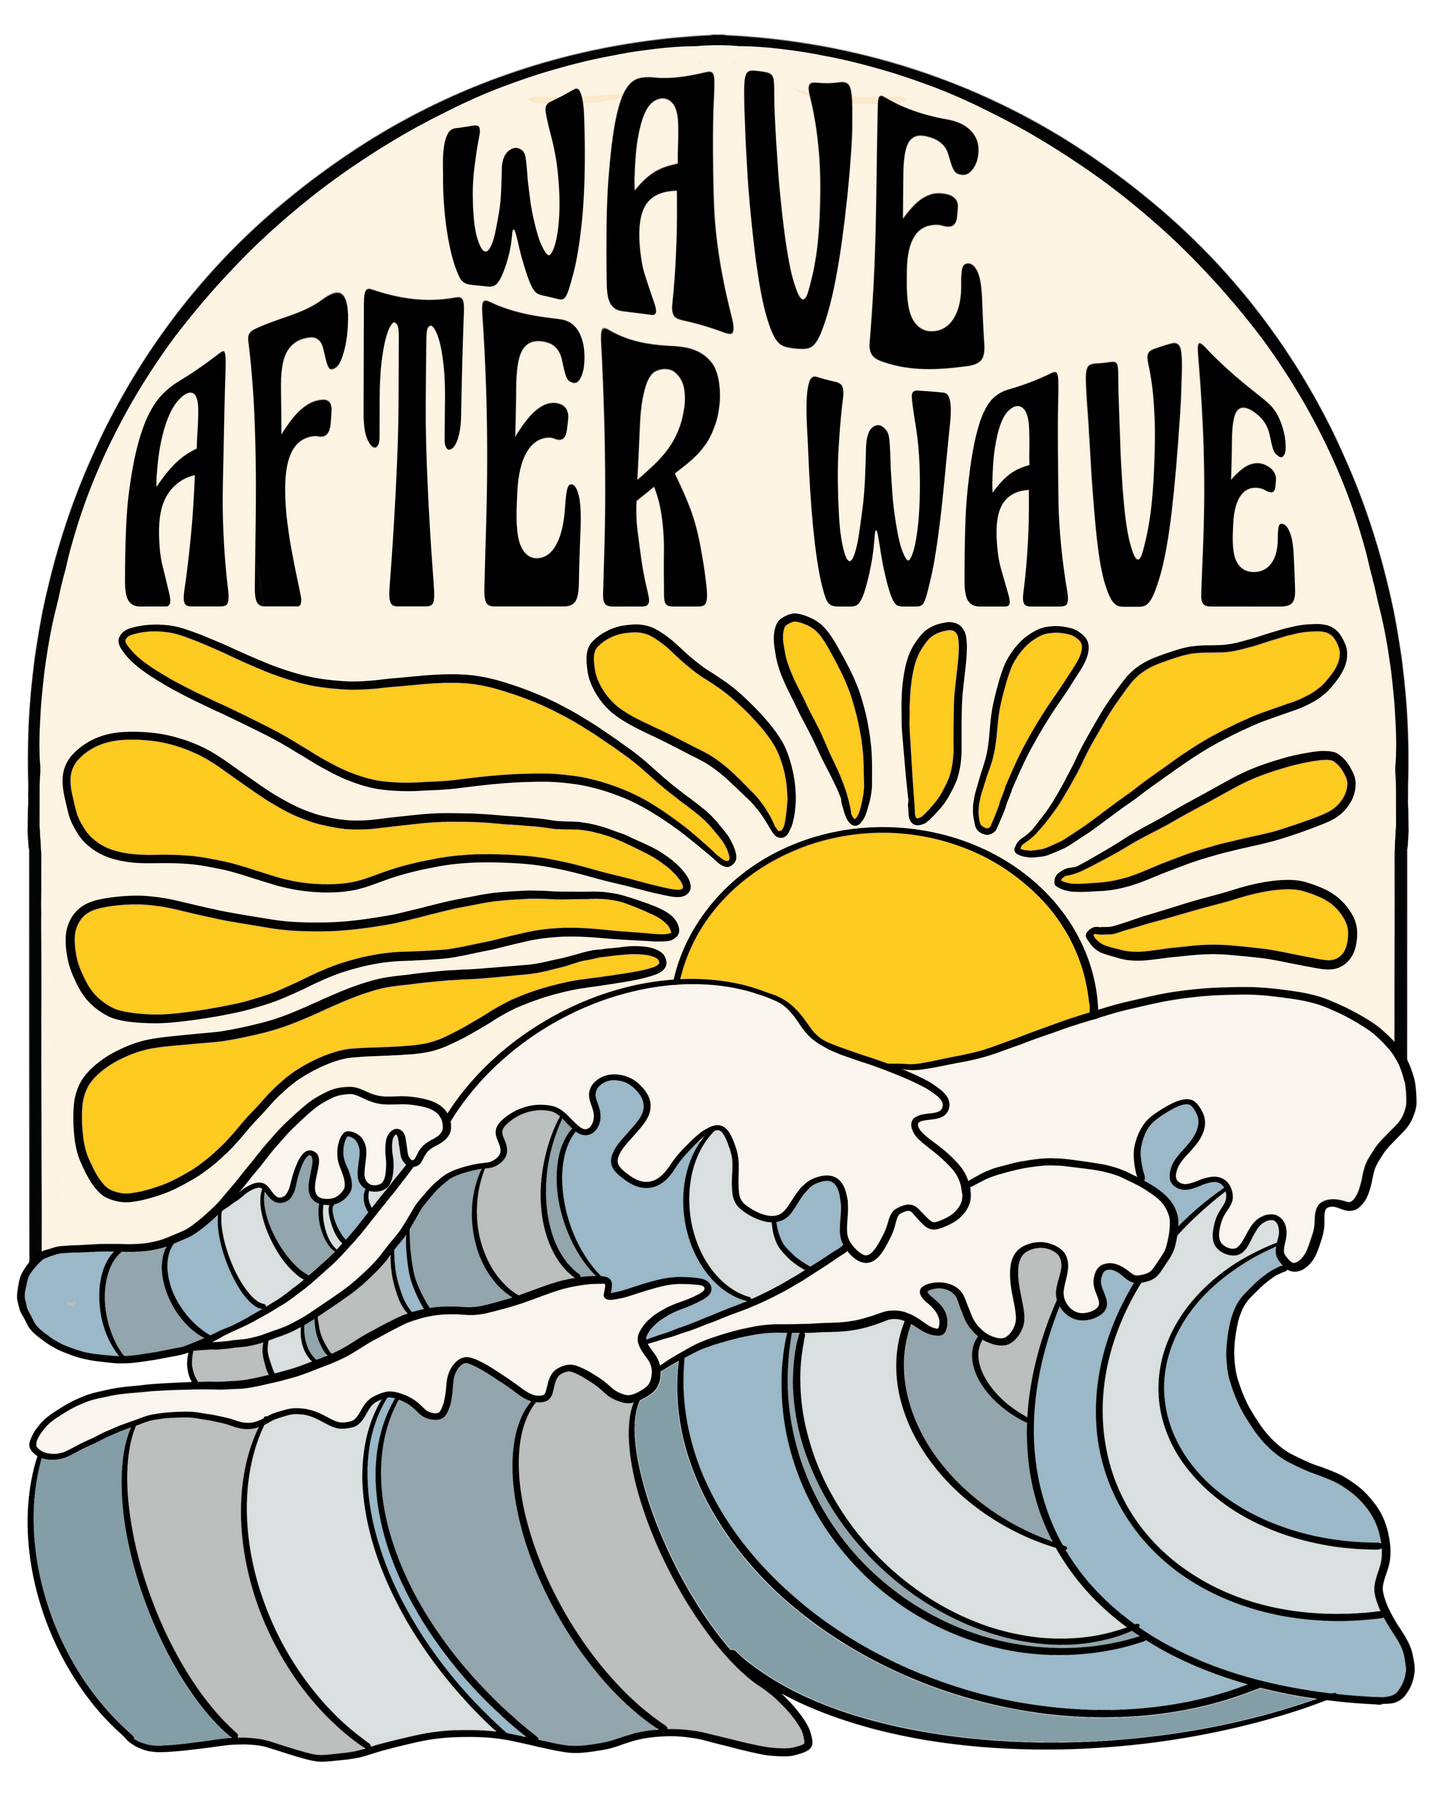 "Wave after Wave" Unisex-Hoodie